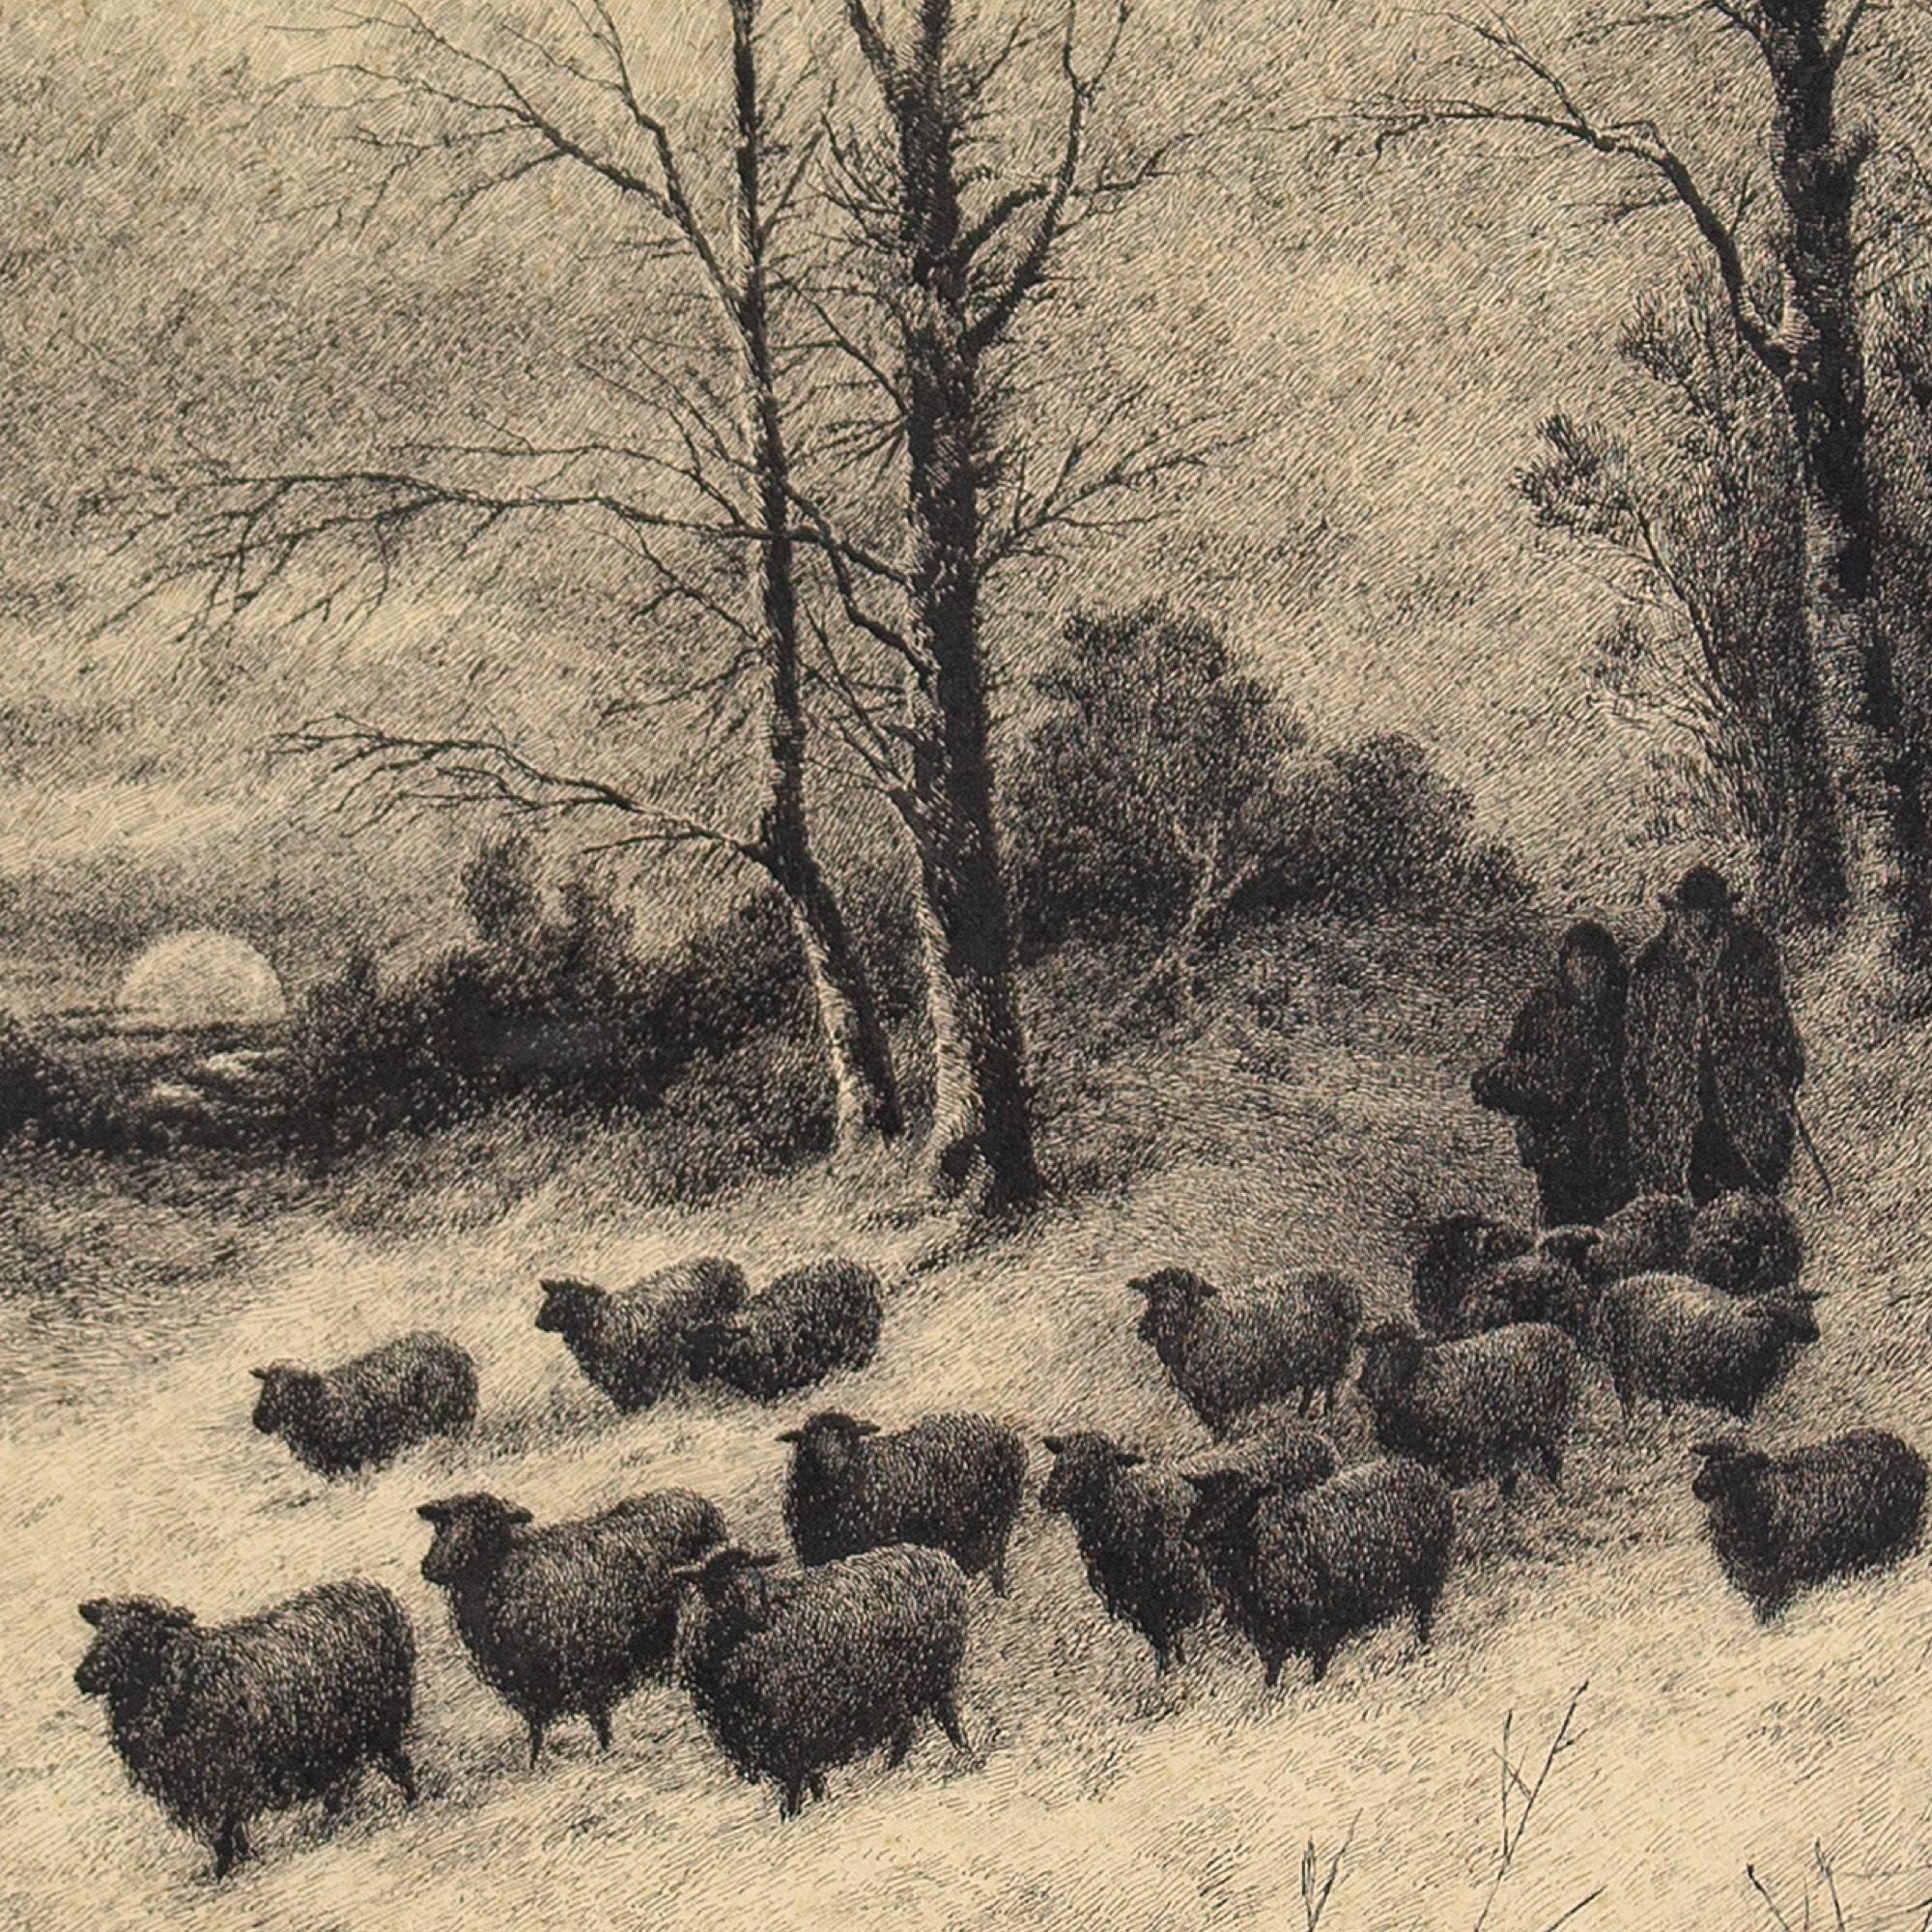 Joseph Farquharson (Circle), The Flock, Drawing 2